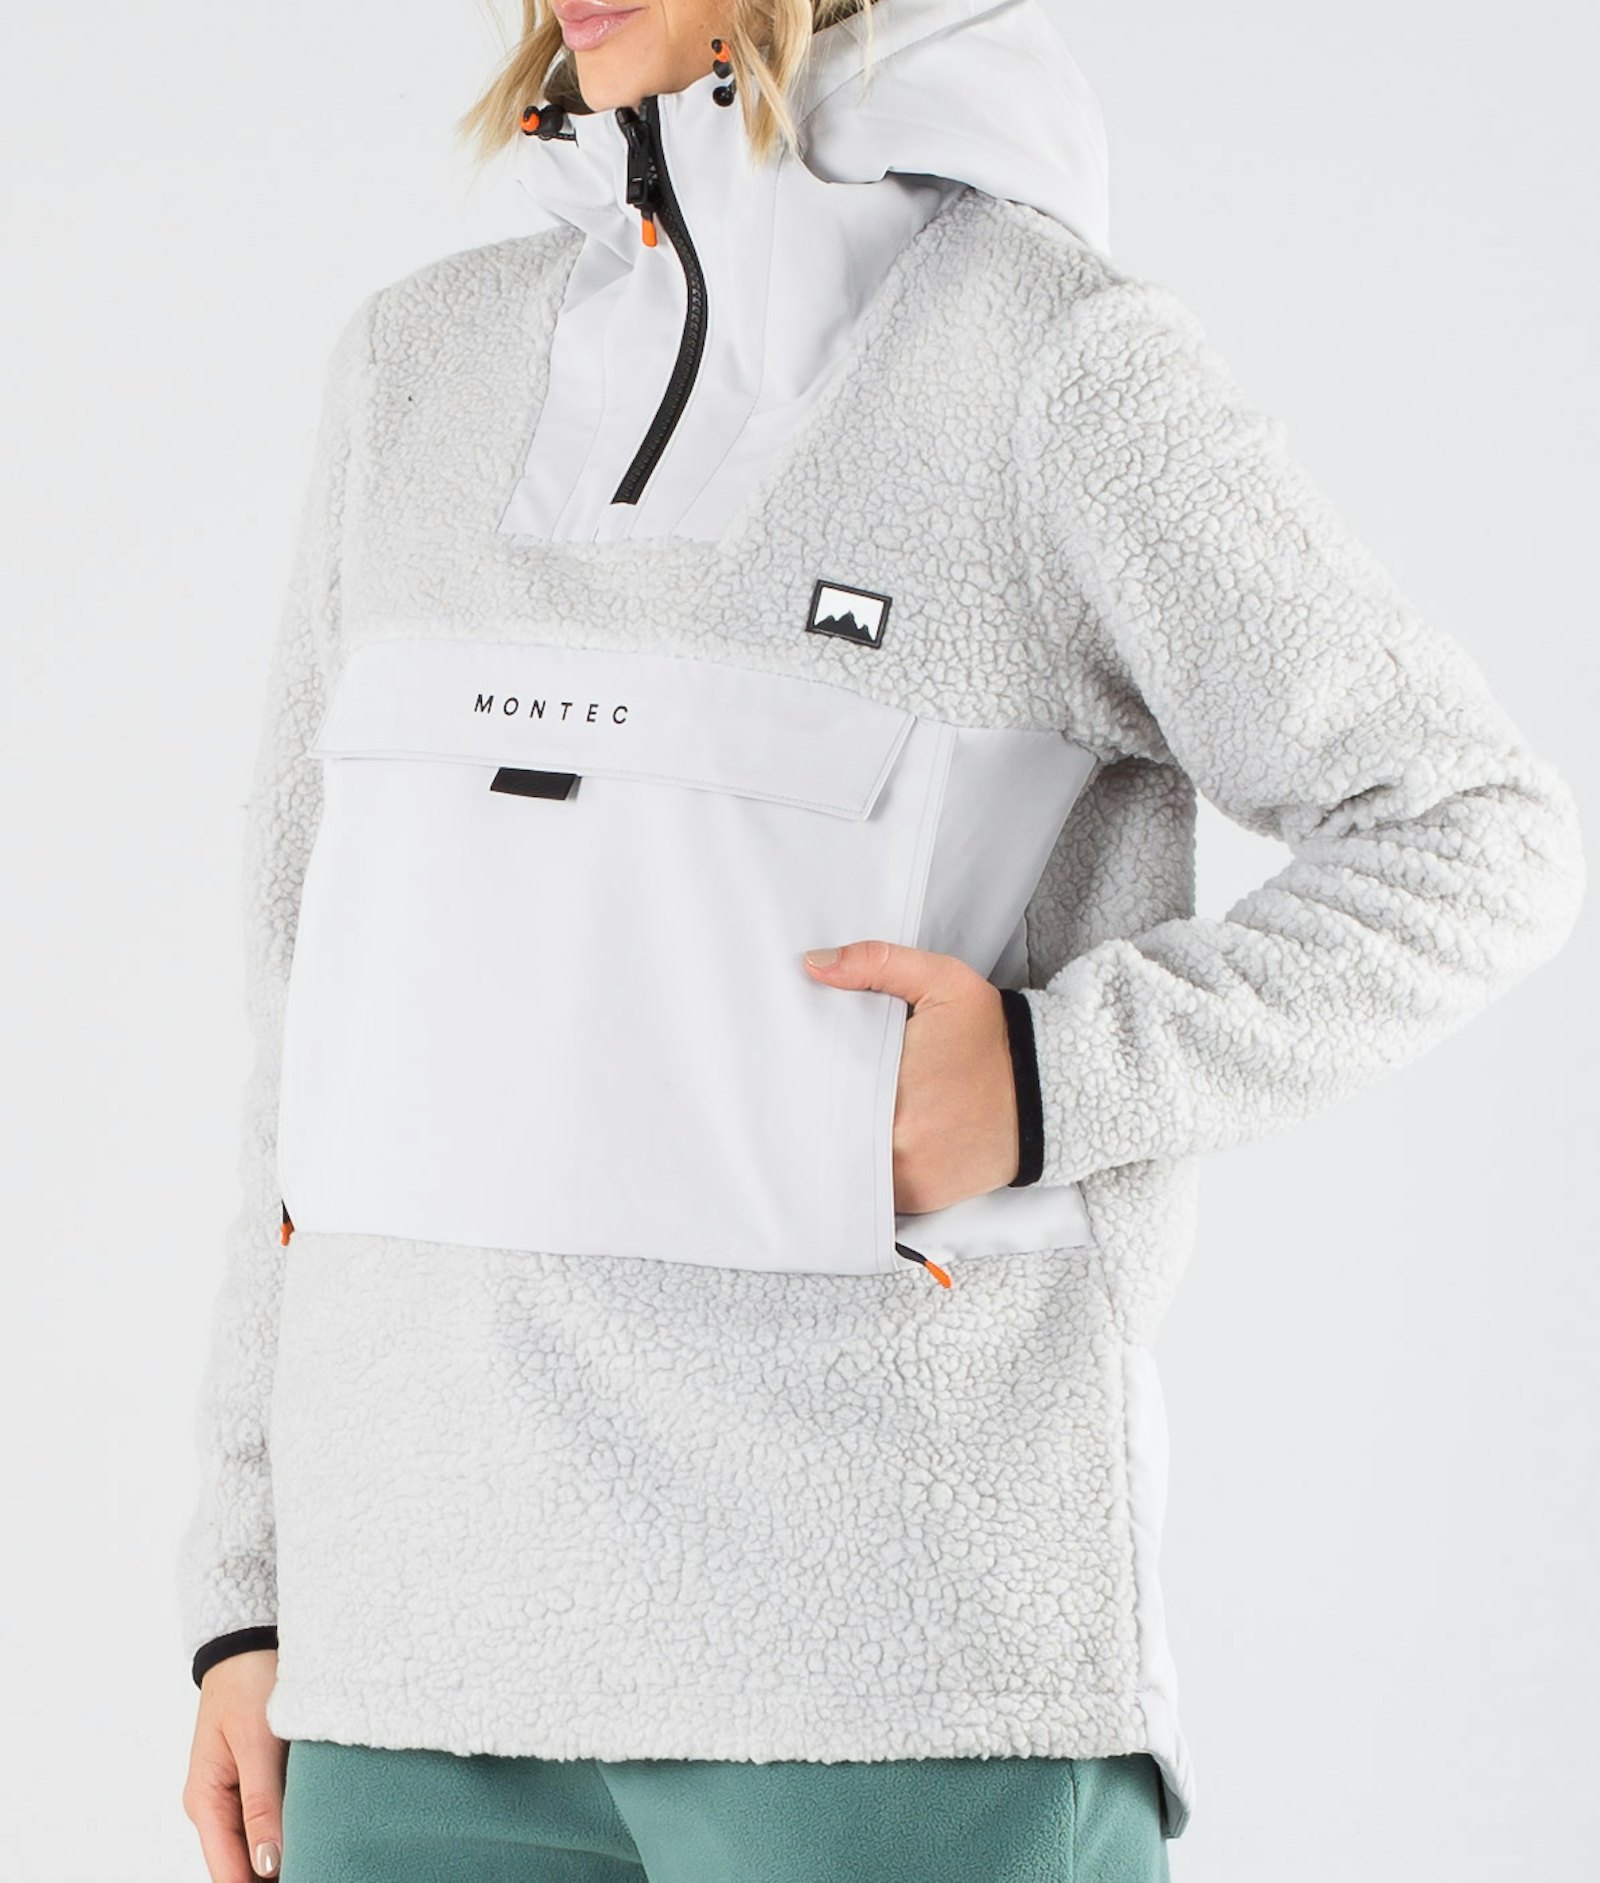 Montec Lima W 2020 Polar con Capucha Mujer Light Grey